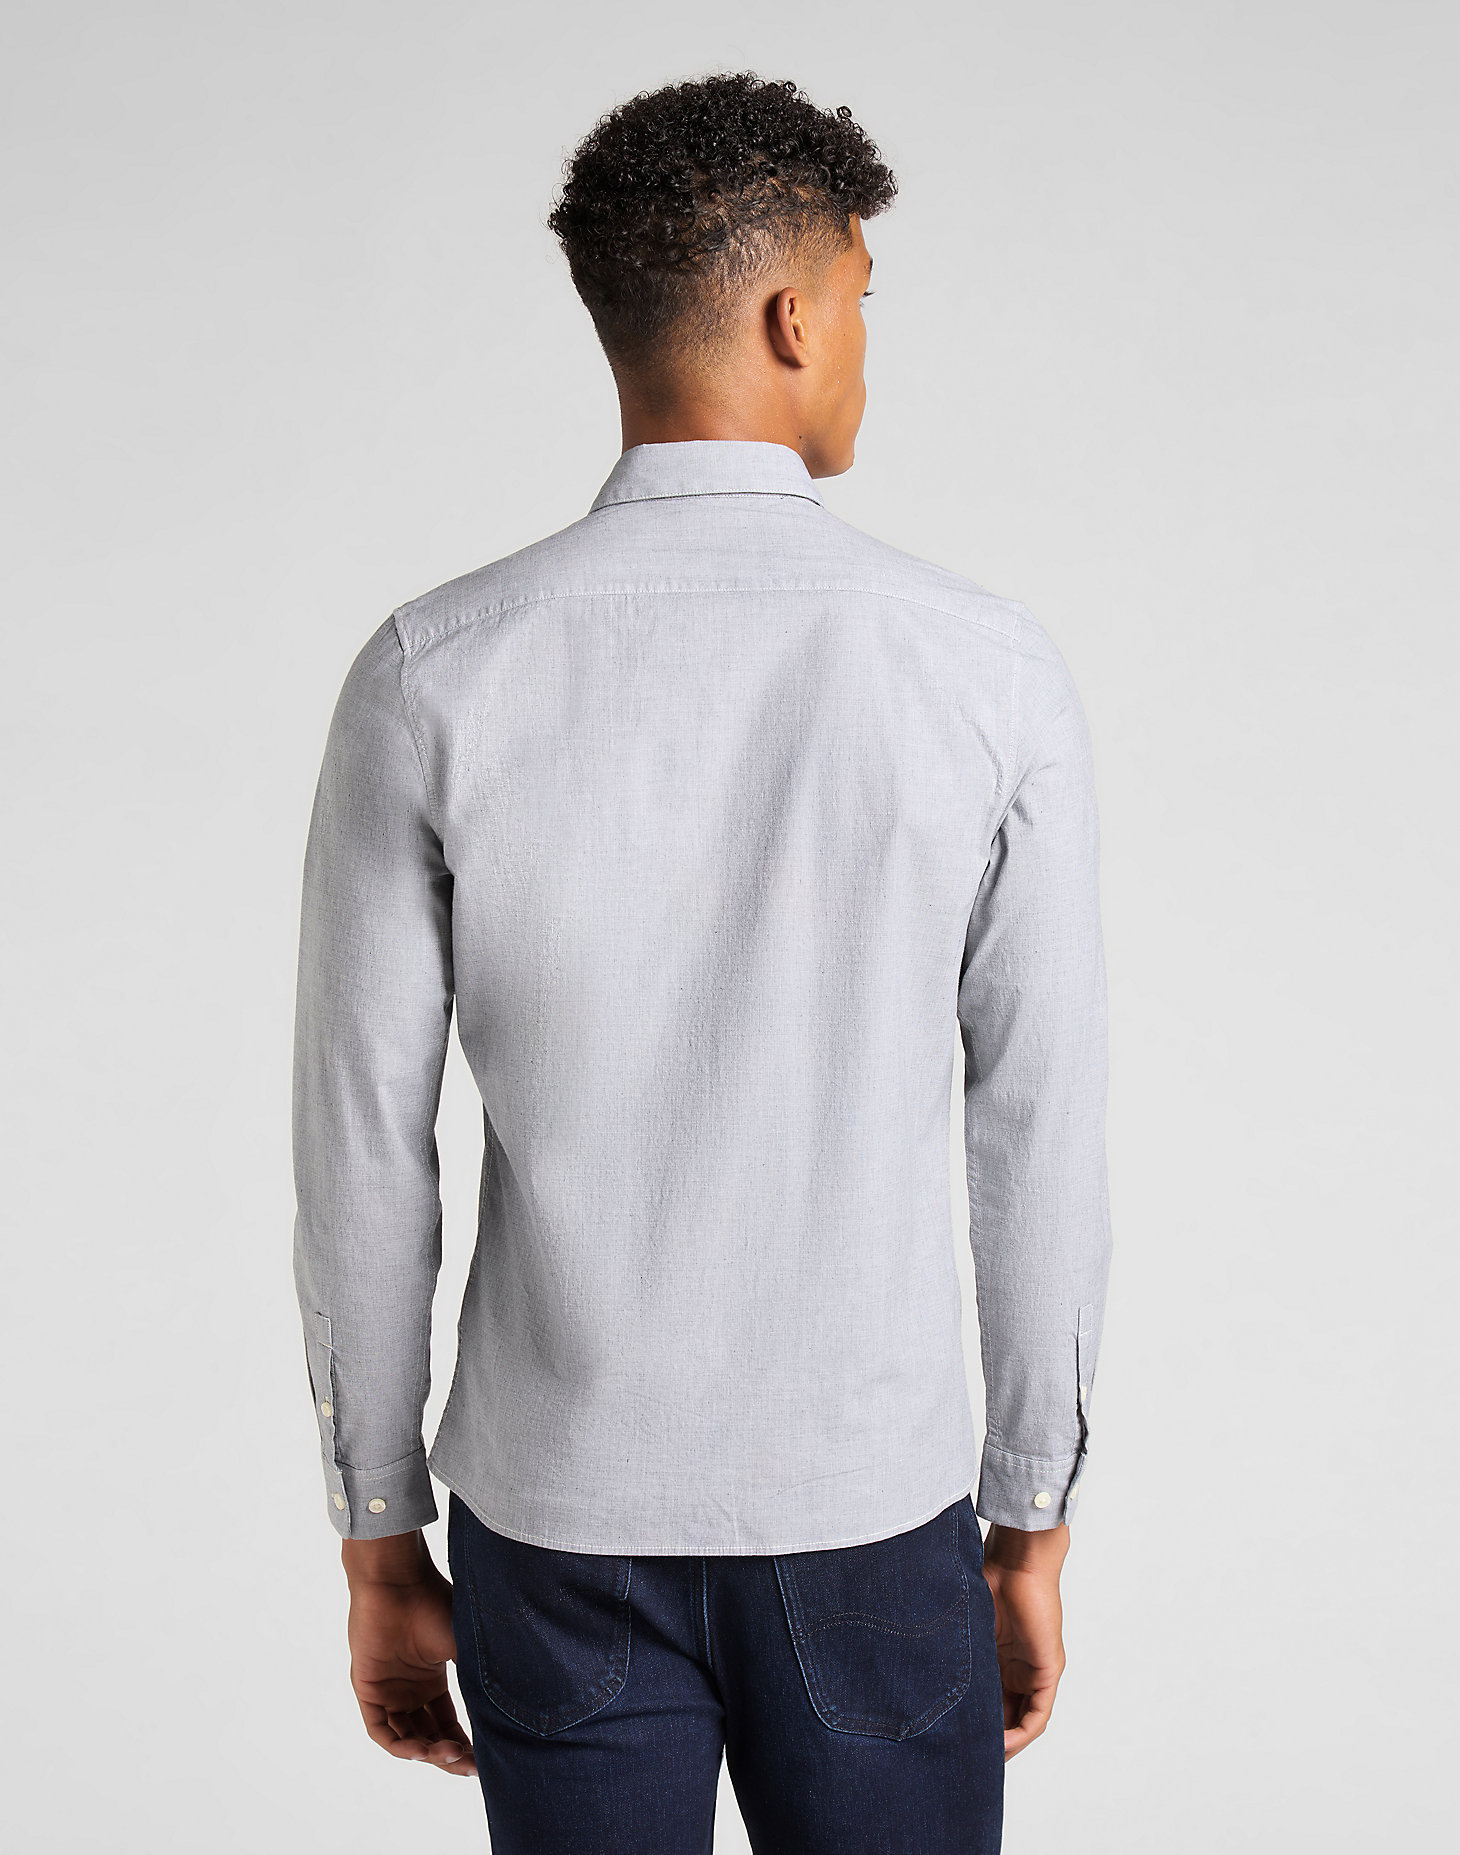 Slim Button Down Shirt in Cloudburst Grey alternative view 1